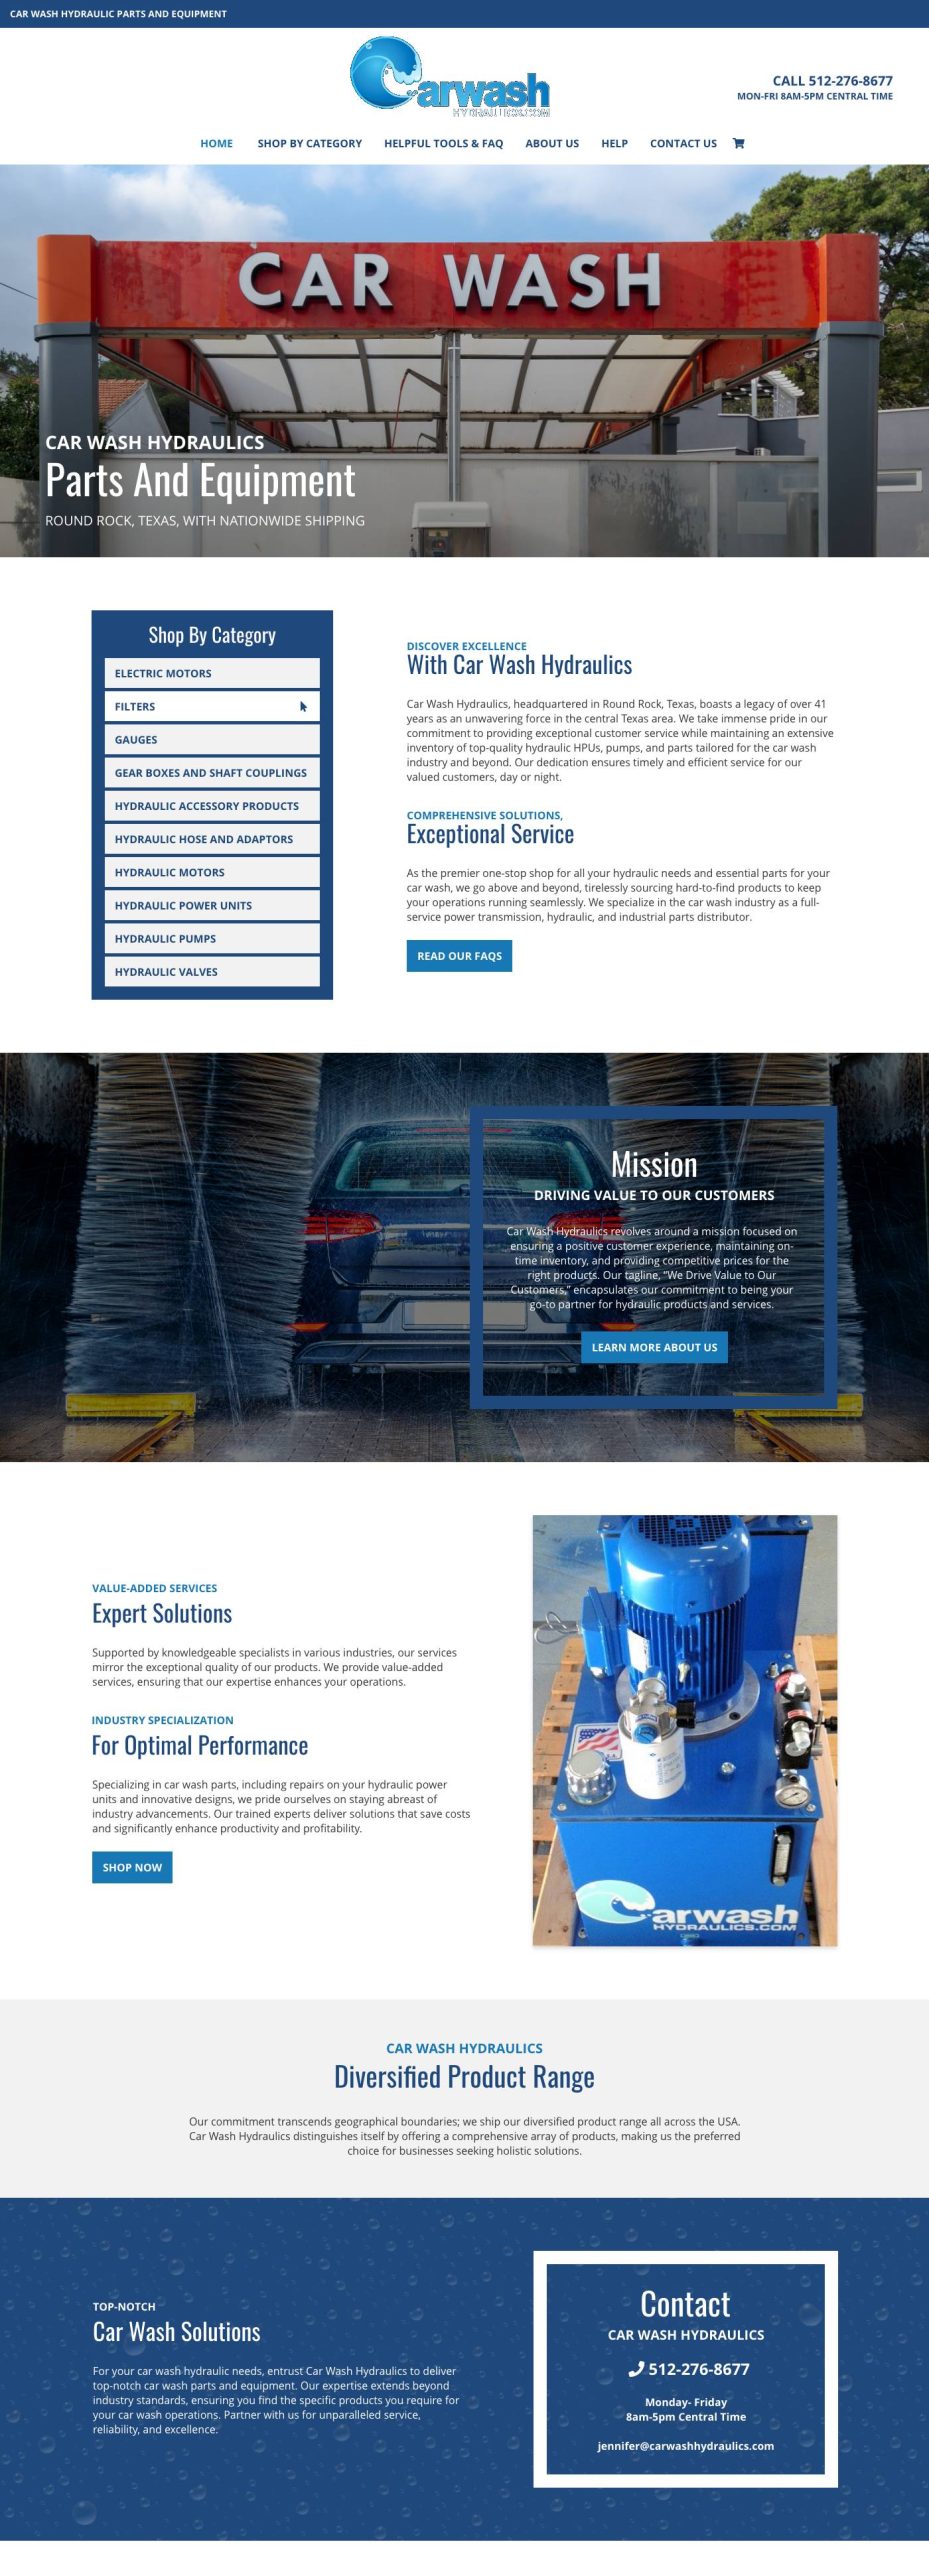 Screenshot of the Car Wash Hydraulics website homepage.